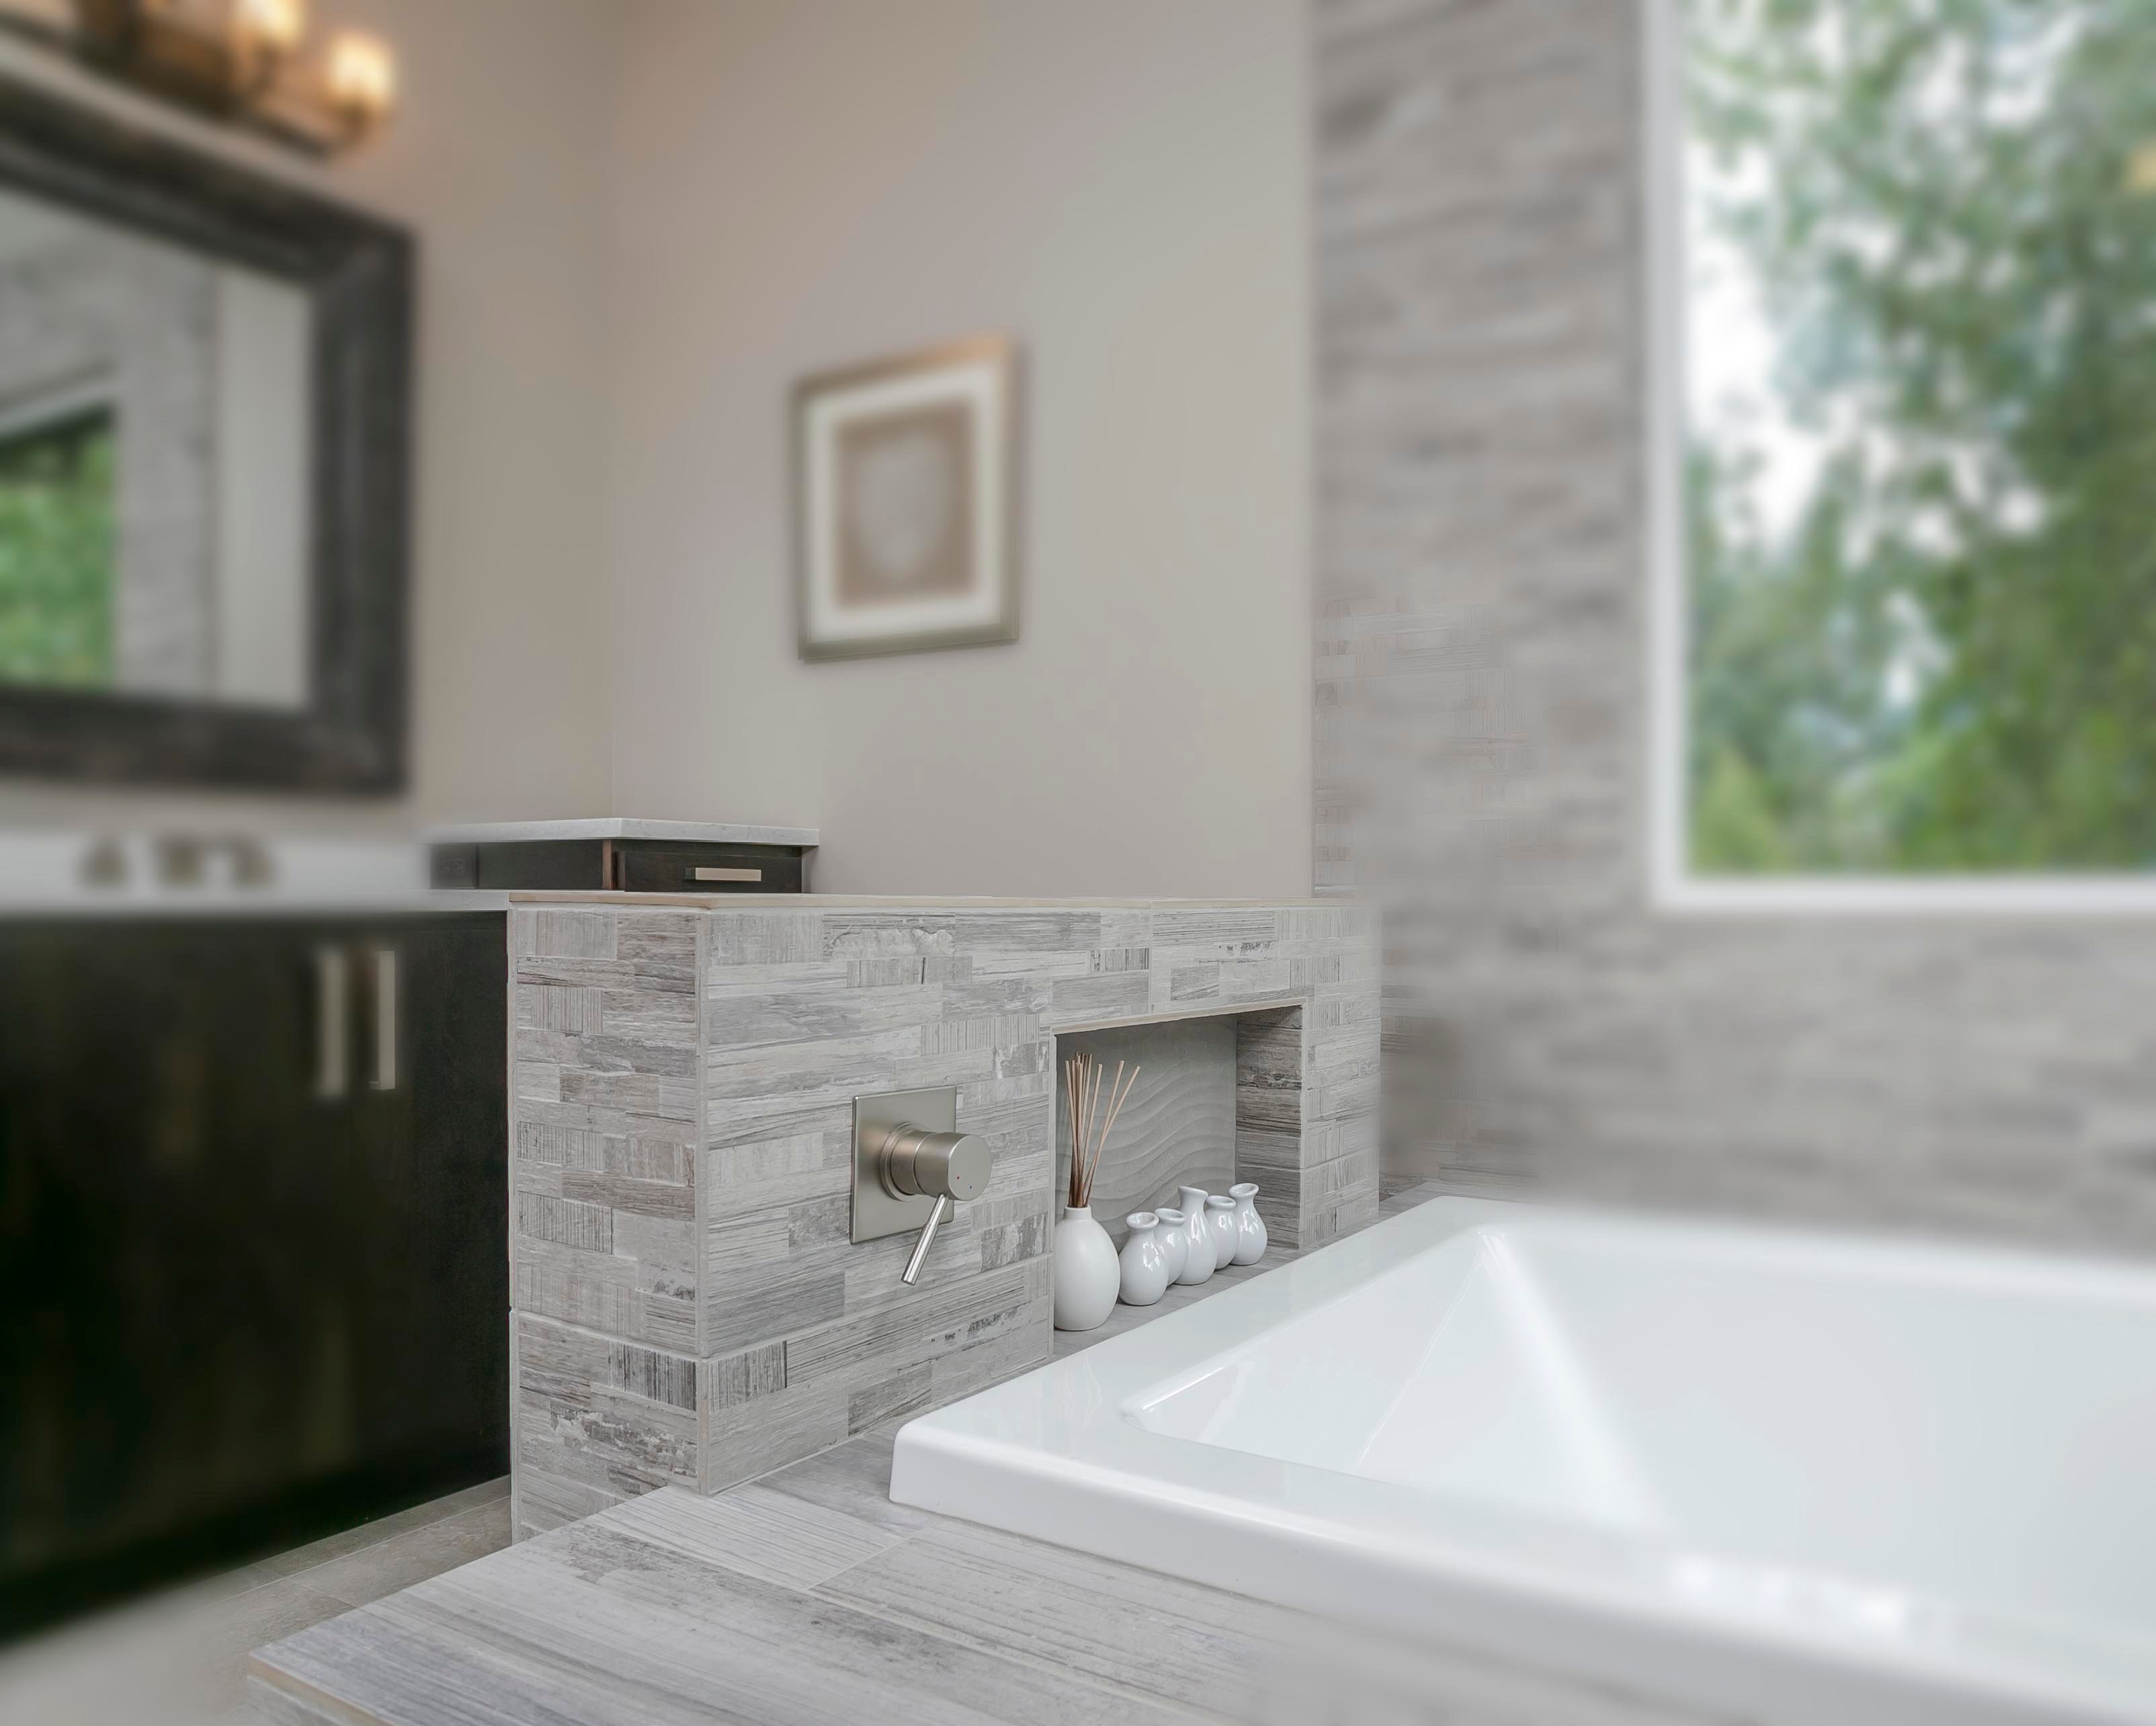 Bathroom remodel with a grey tiled tub